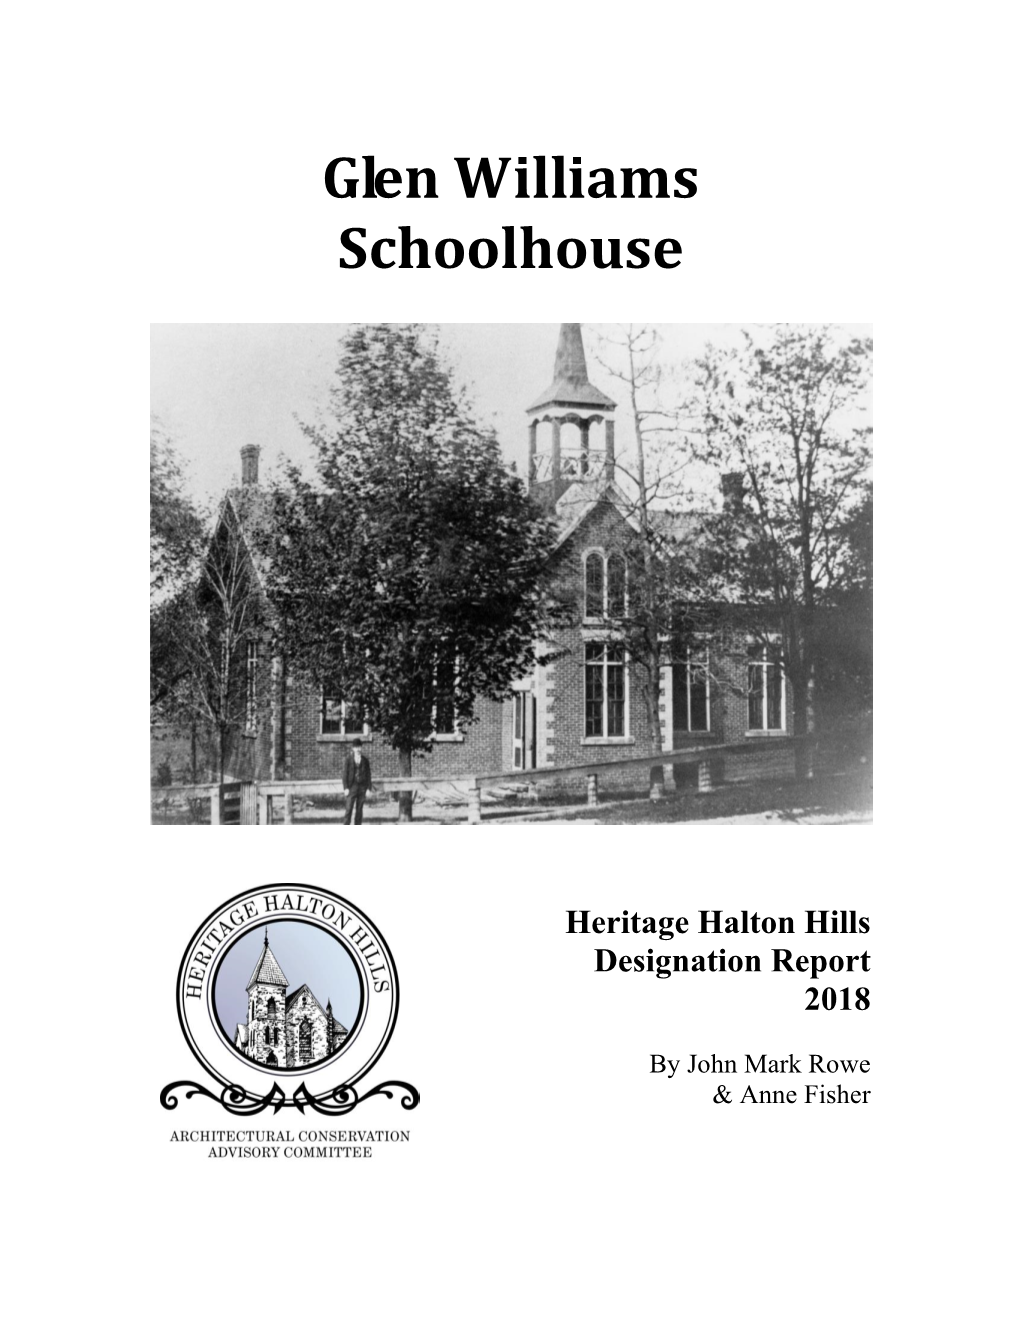 Glen Williams Schoolhouse